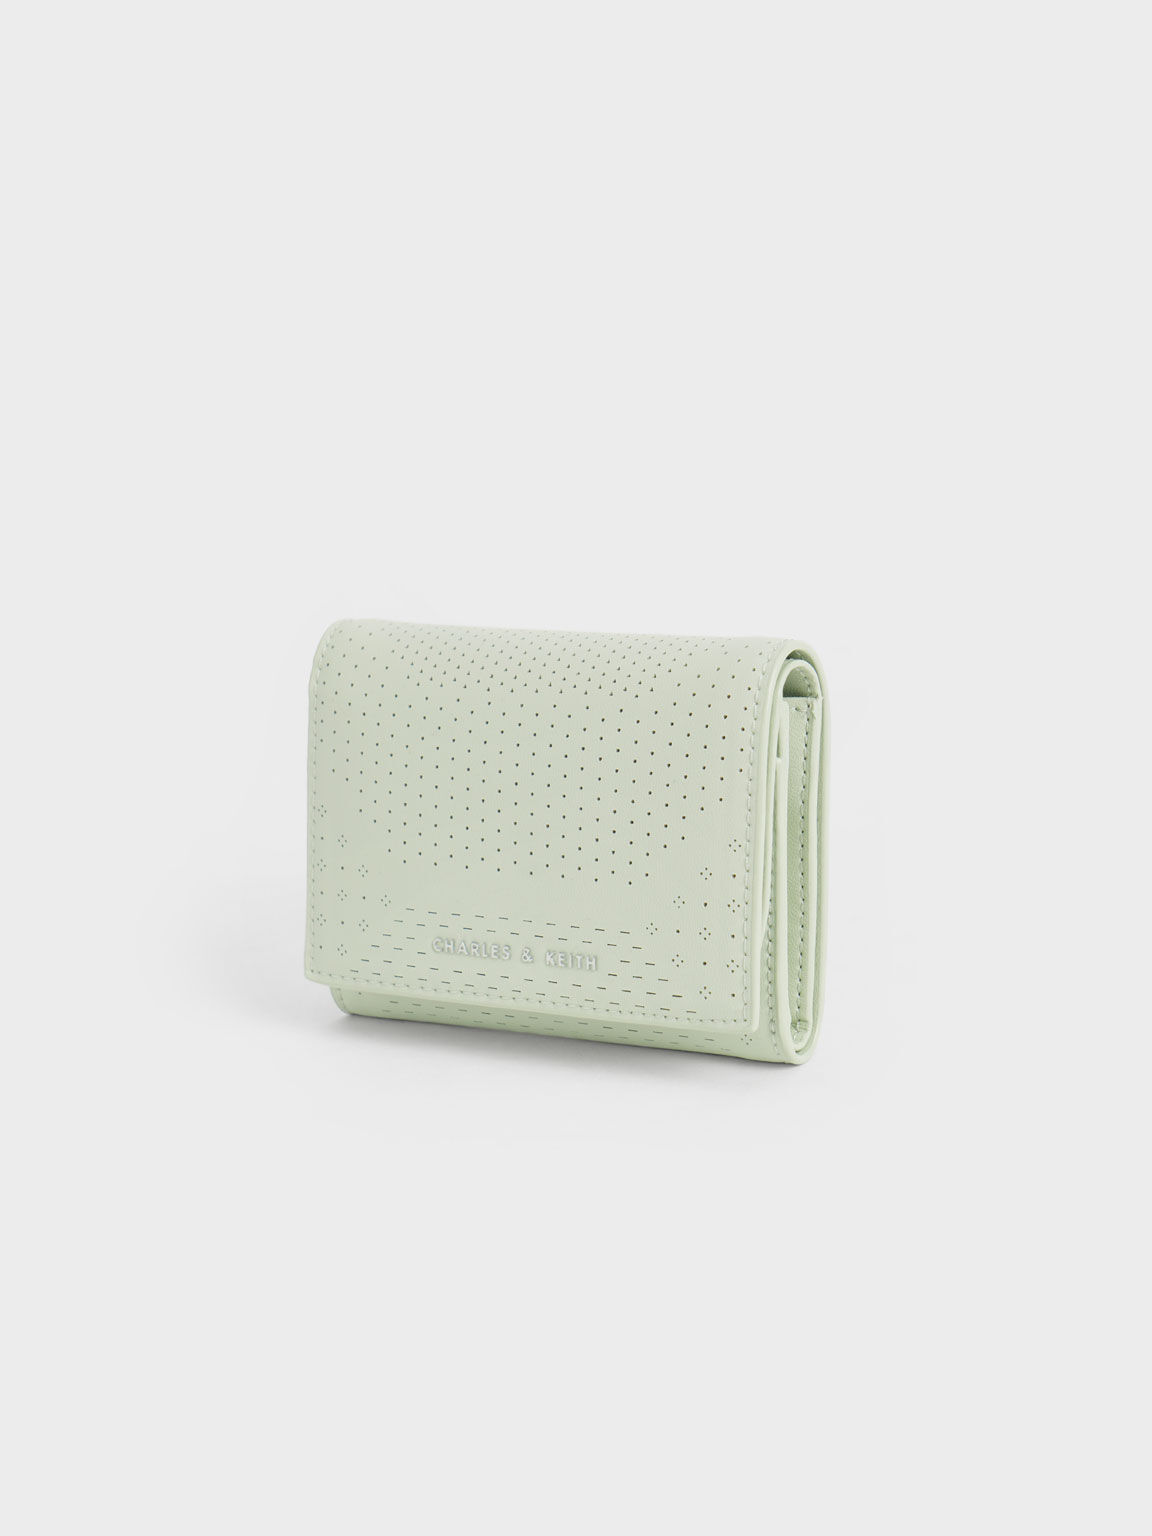 Lorain Perforated Wallet, Mint Green, hi-res